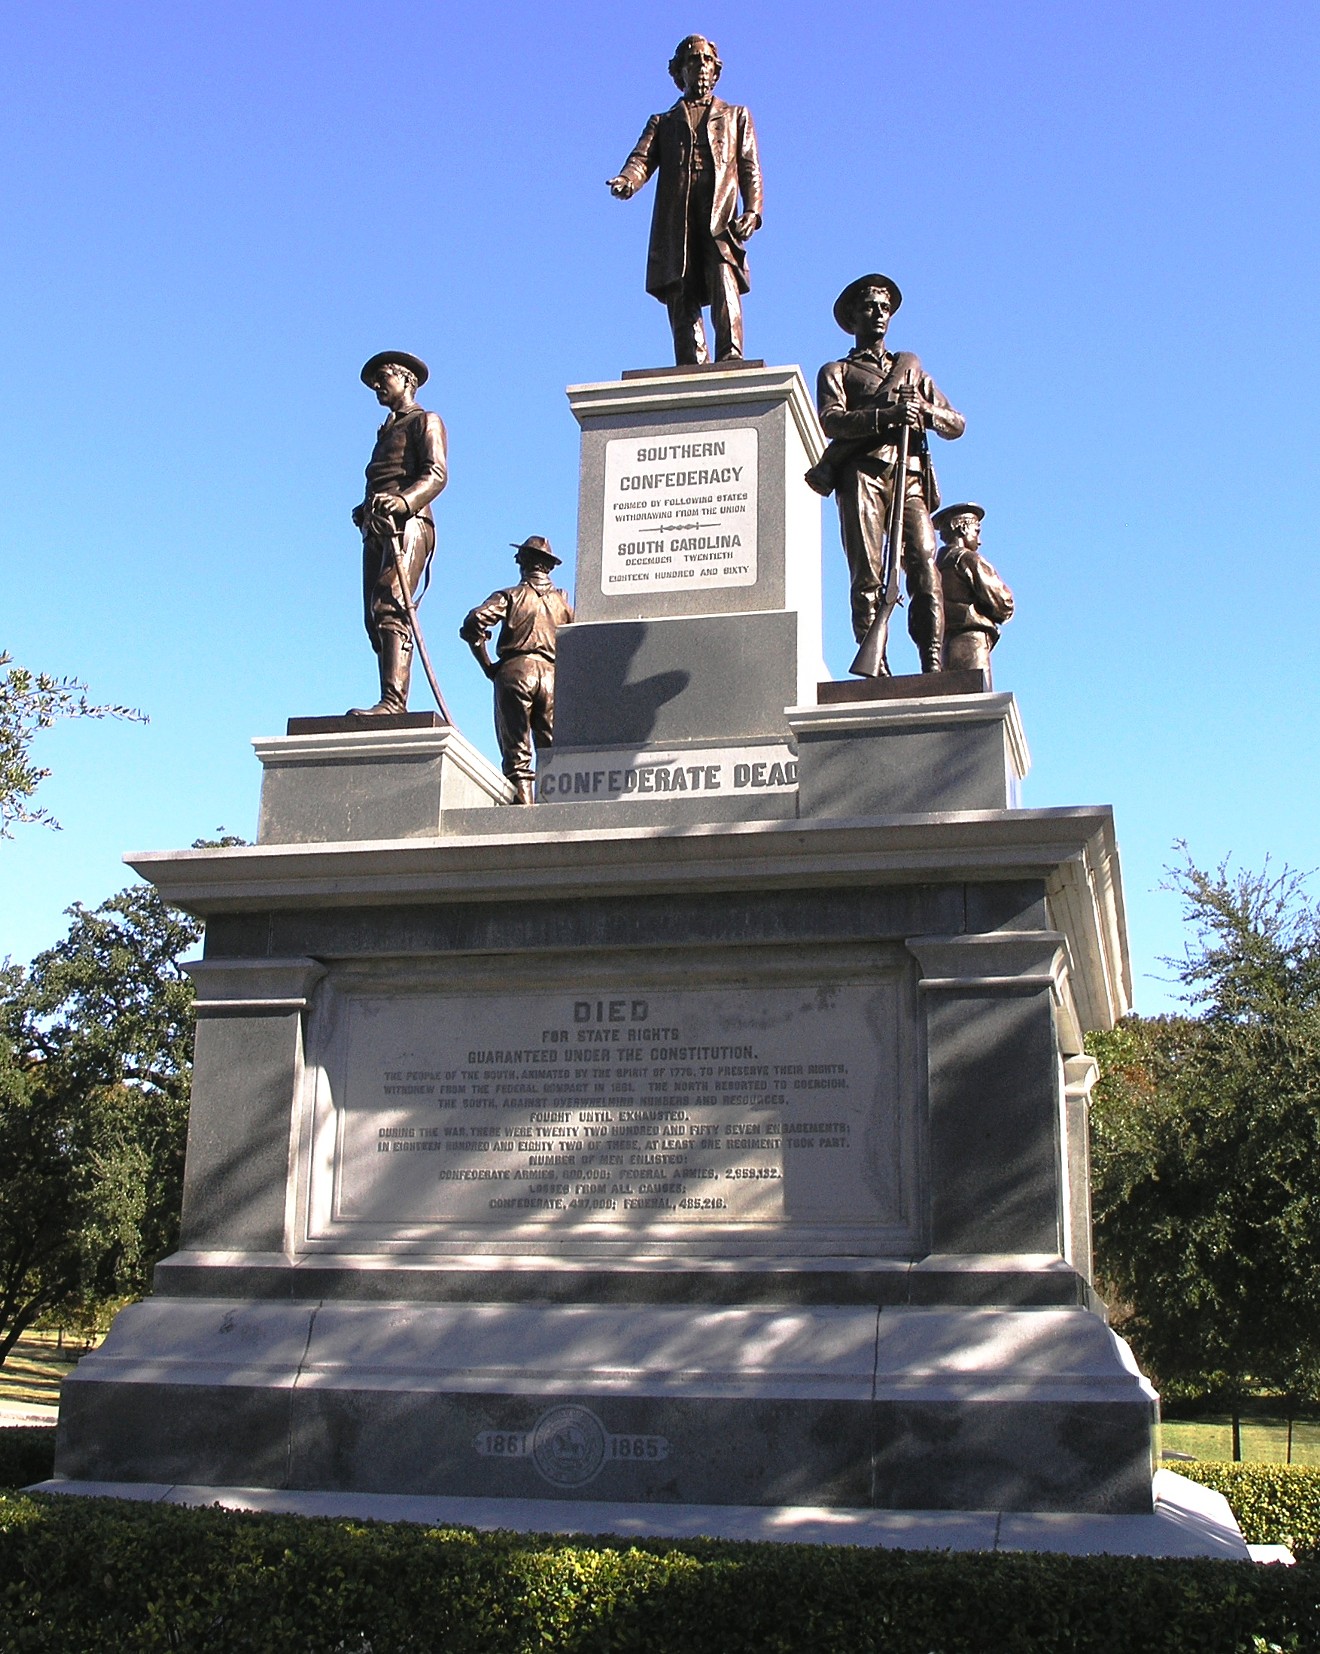 The push to remove Confederate memorials continues.